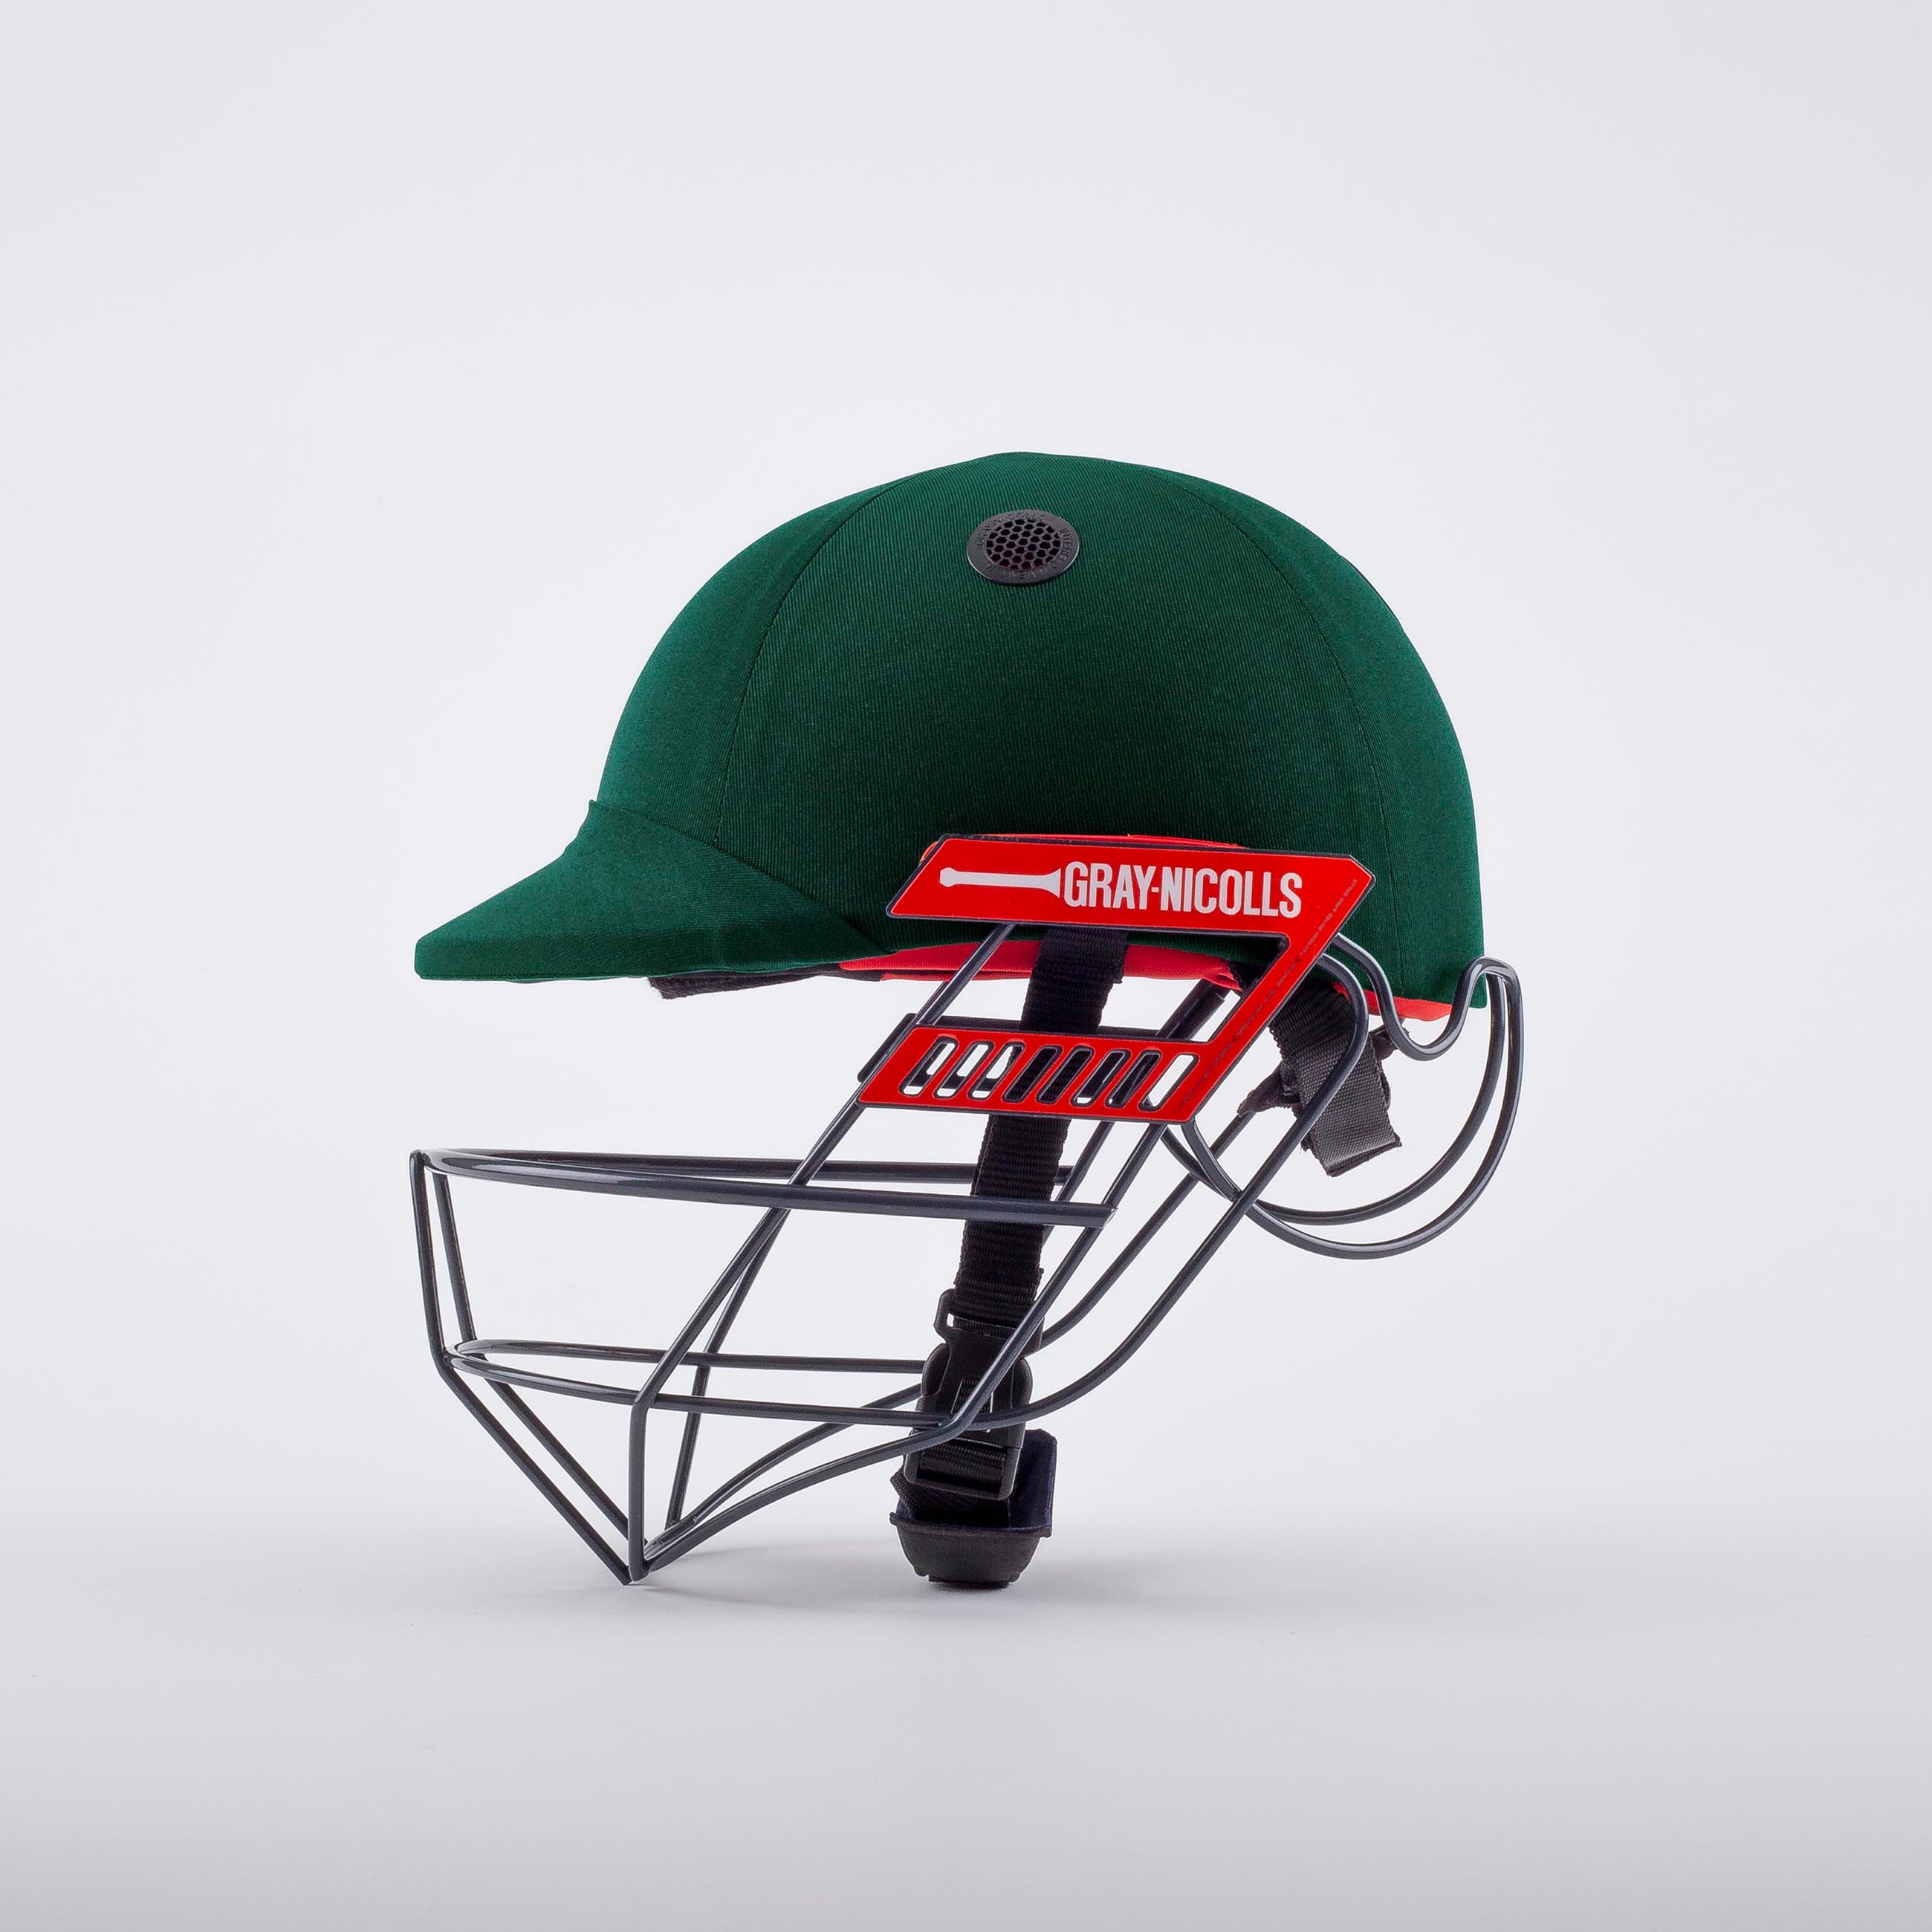 Ultimate 360 Cricket Helmet Senior